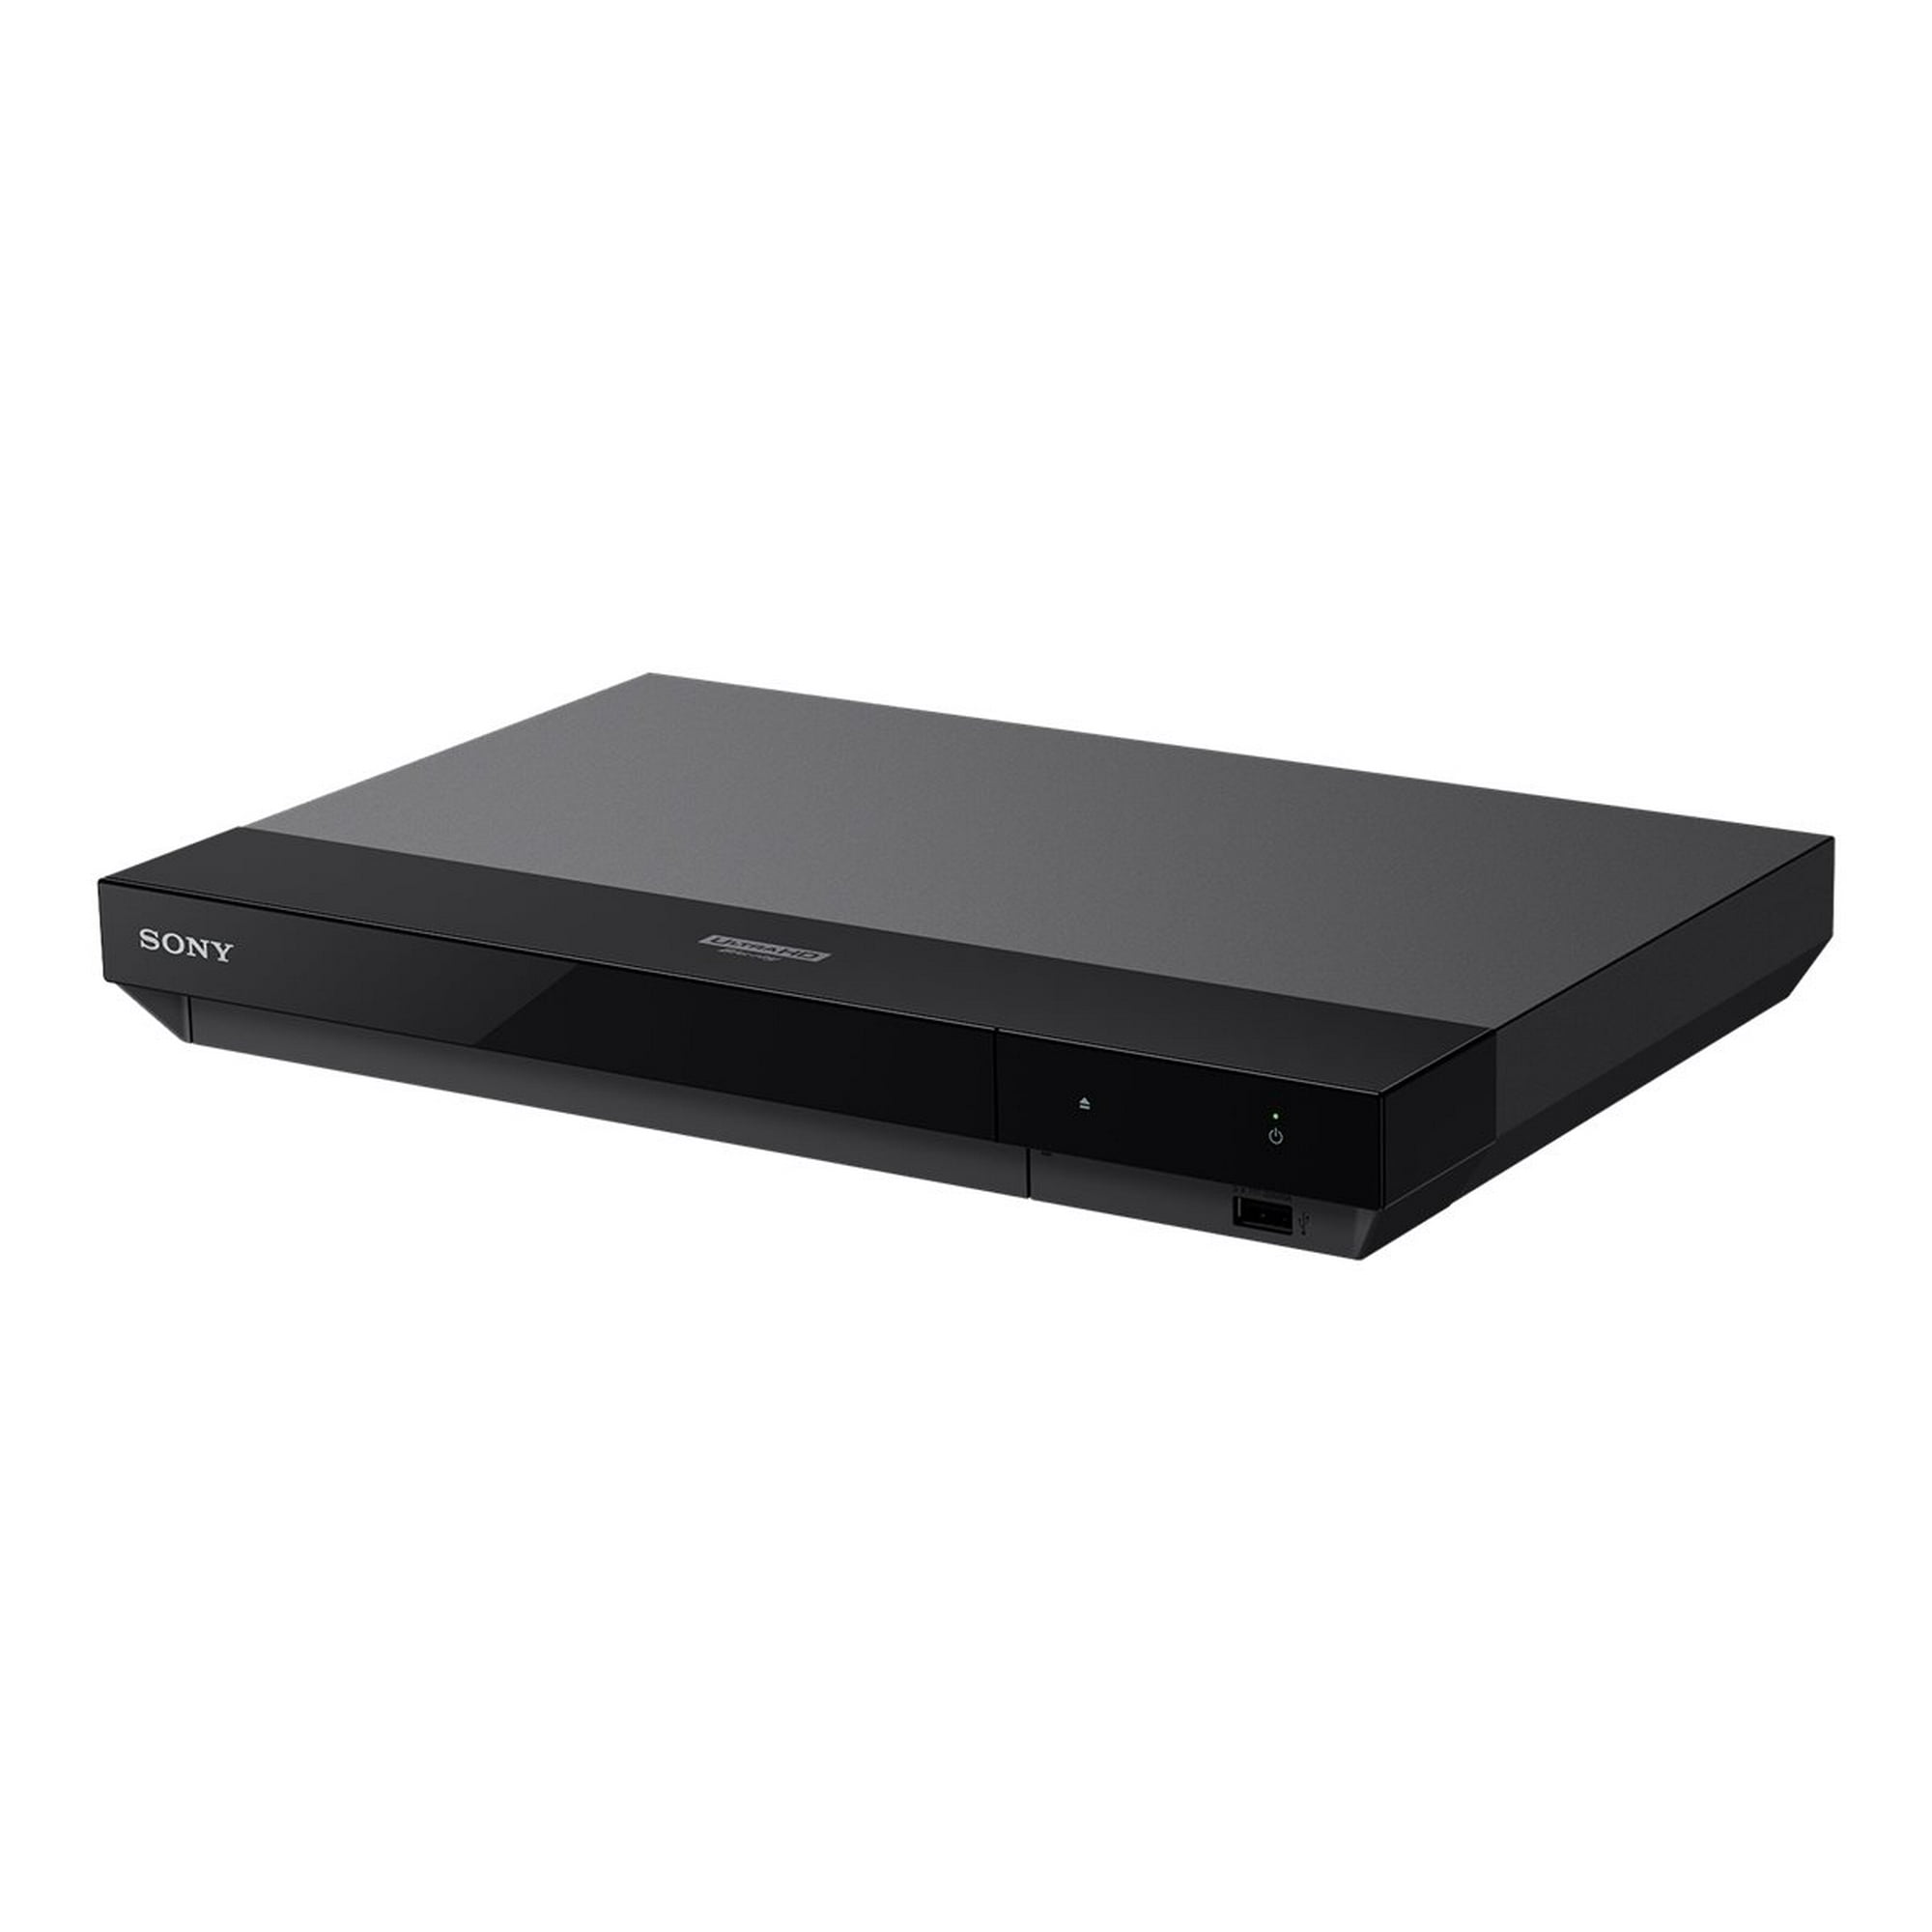 Sony UBP-X700 - Blu-ray disc player - upscaling - Ethernet, Wi-Fi - black | Walmart Canada